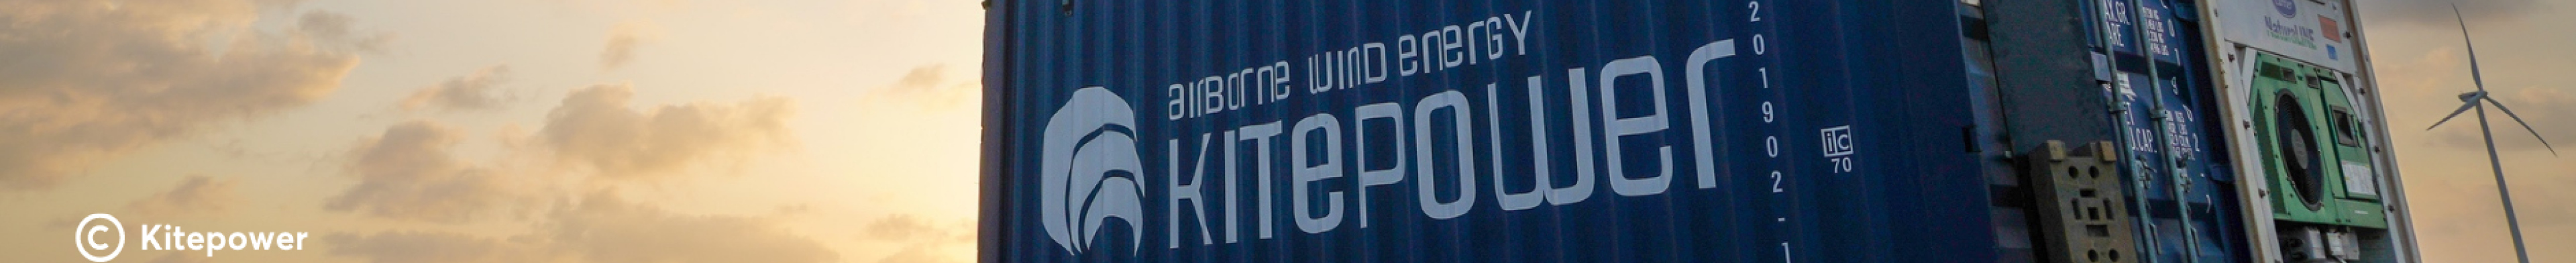 banner-kitepower.png